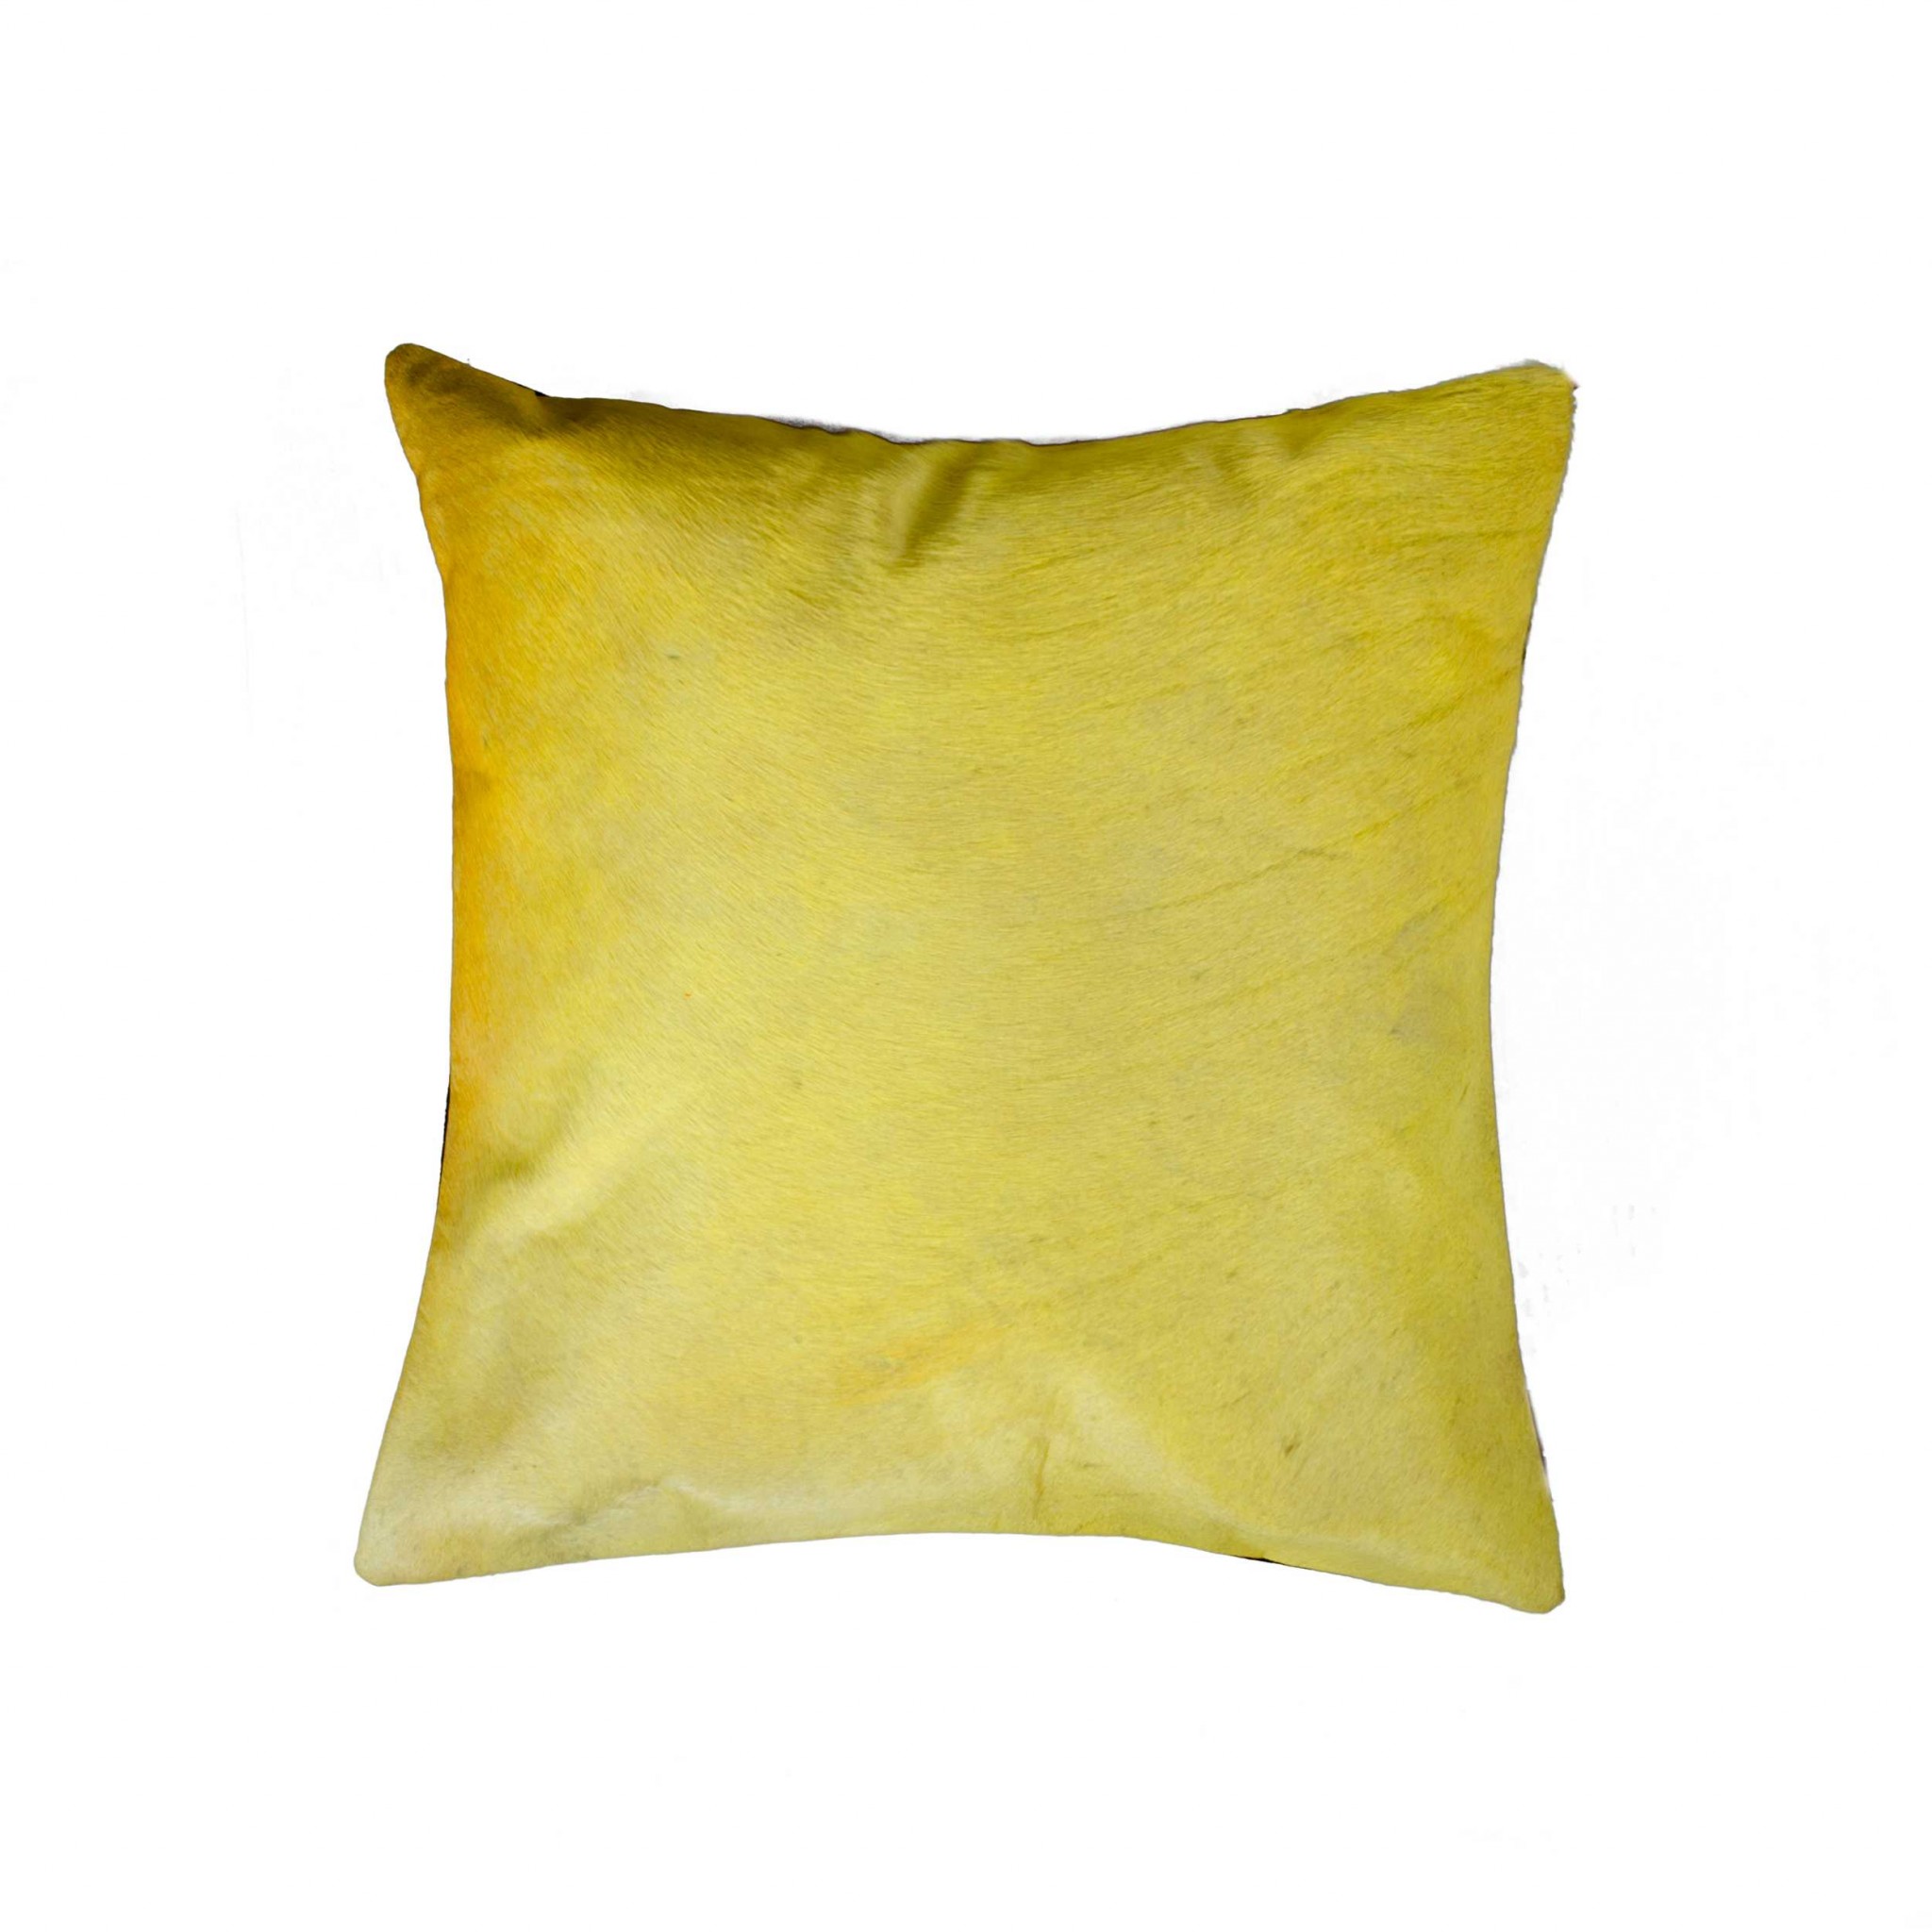 18" x 18" x 5" Yellow Cowhide - Pillow